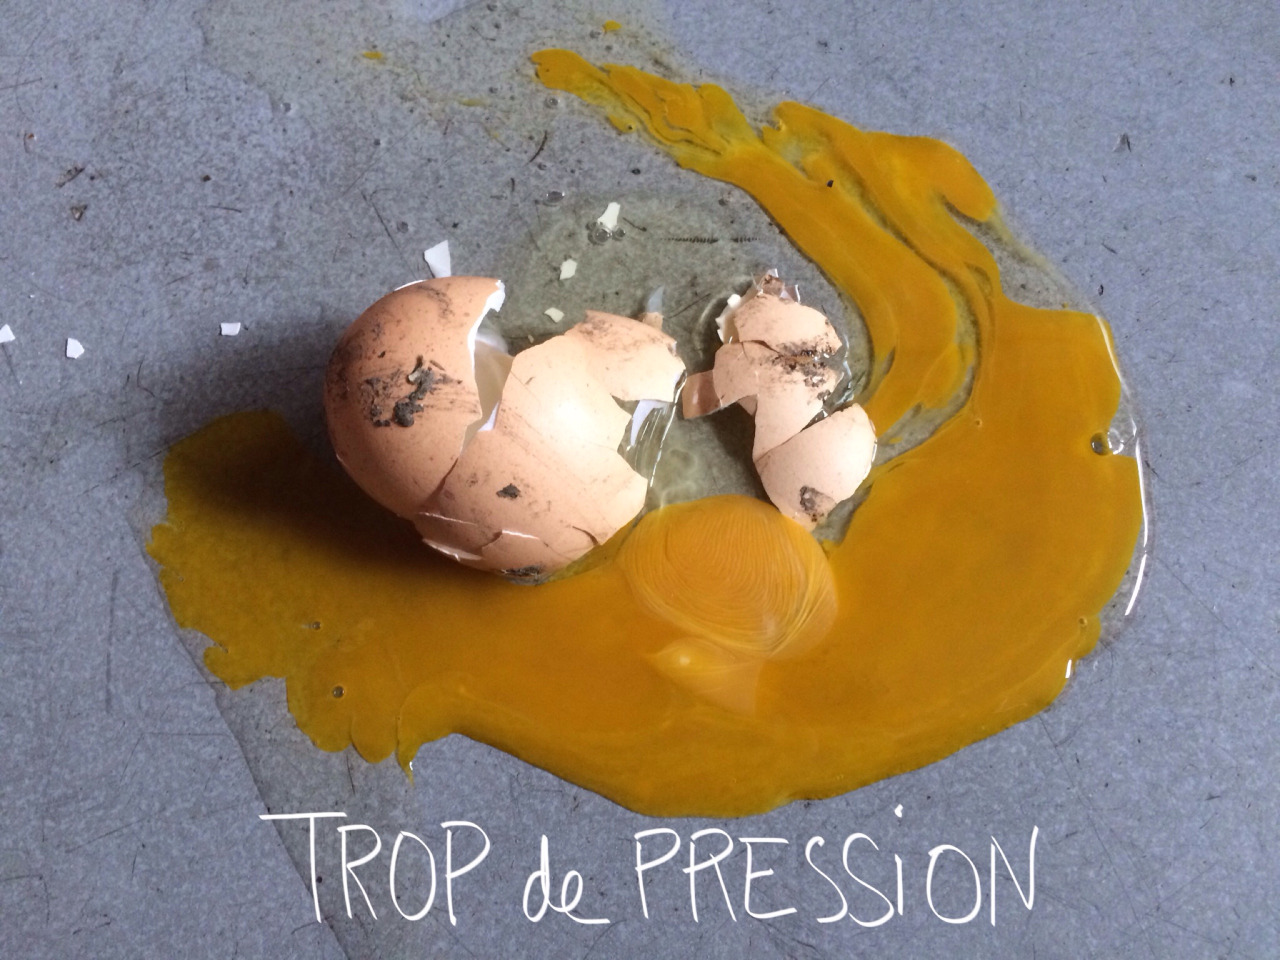 egg@work “trop de pression” / “too much pressure” par Cibi1974